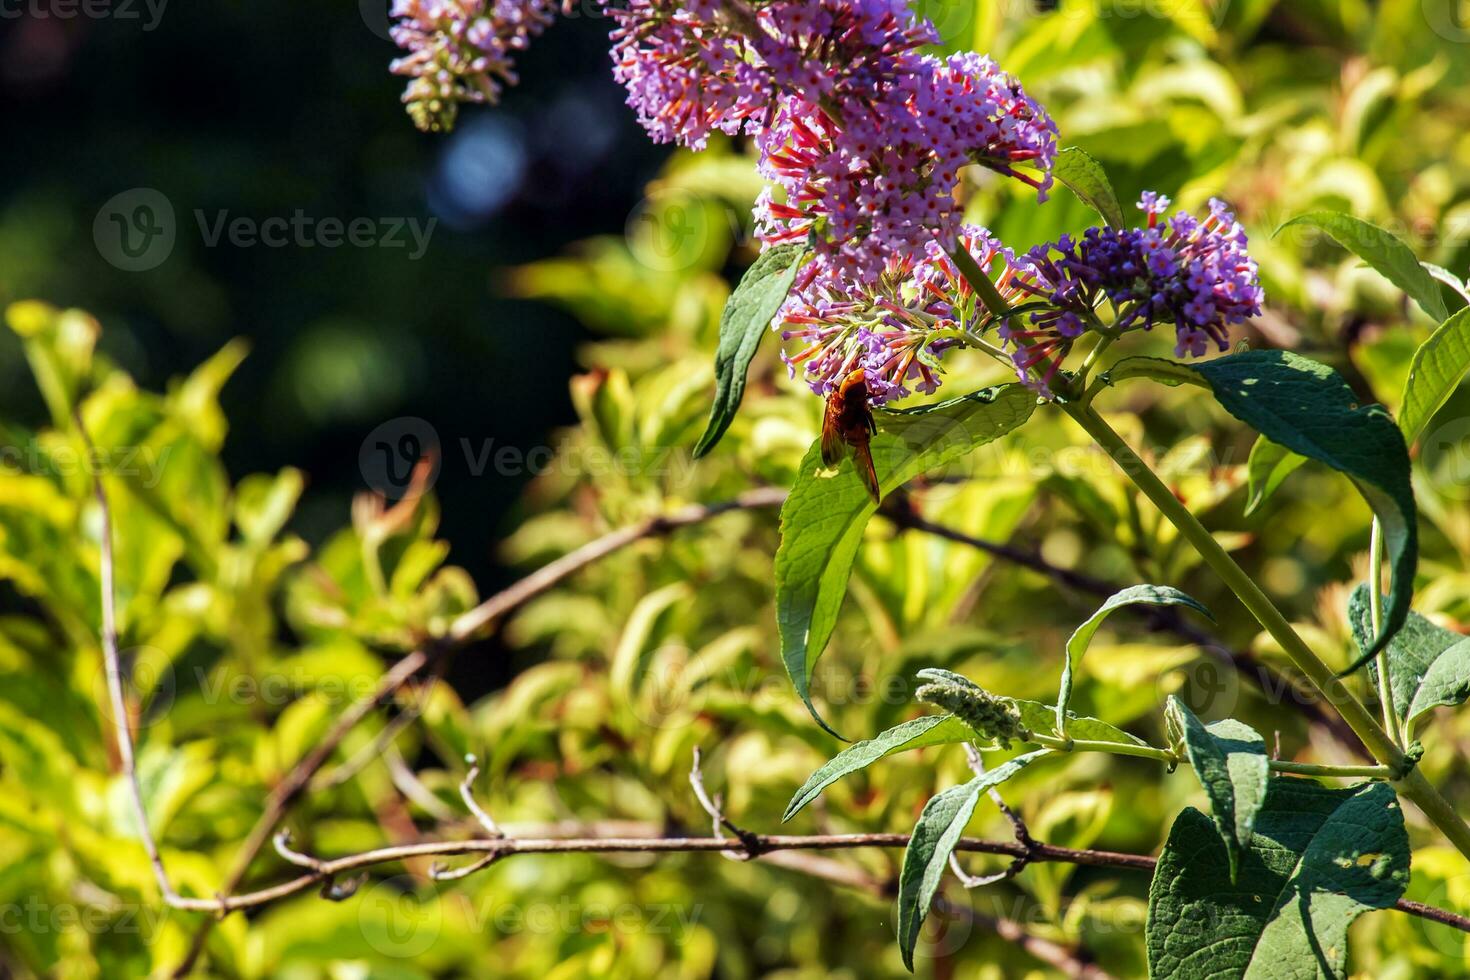 Buddleia summer flowers. Latin name Buddleja davidii. Buddleia Davidii Butterfly Bush. A bee collects nectar from a flower. photo